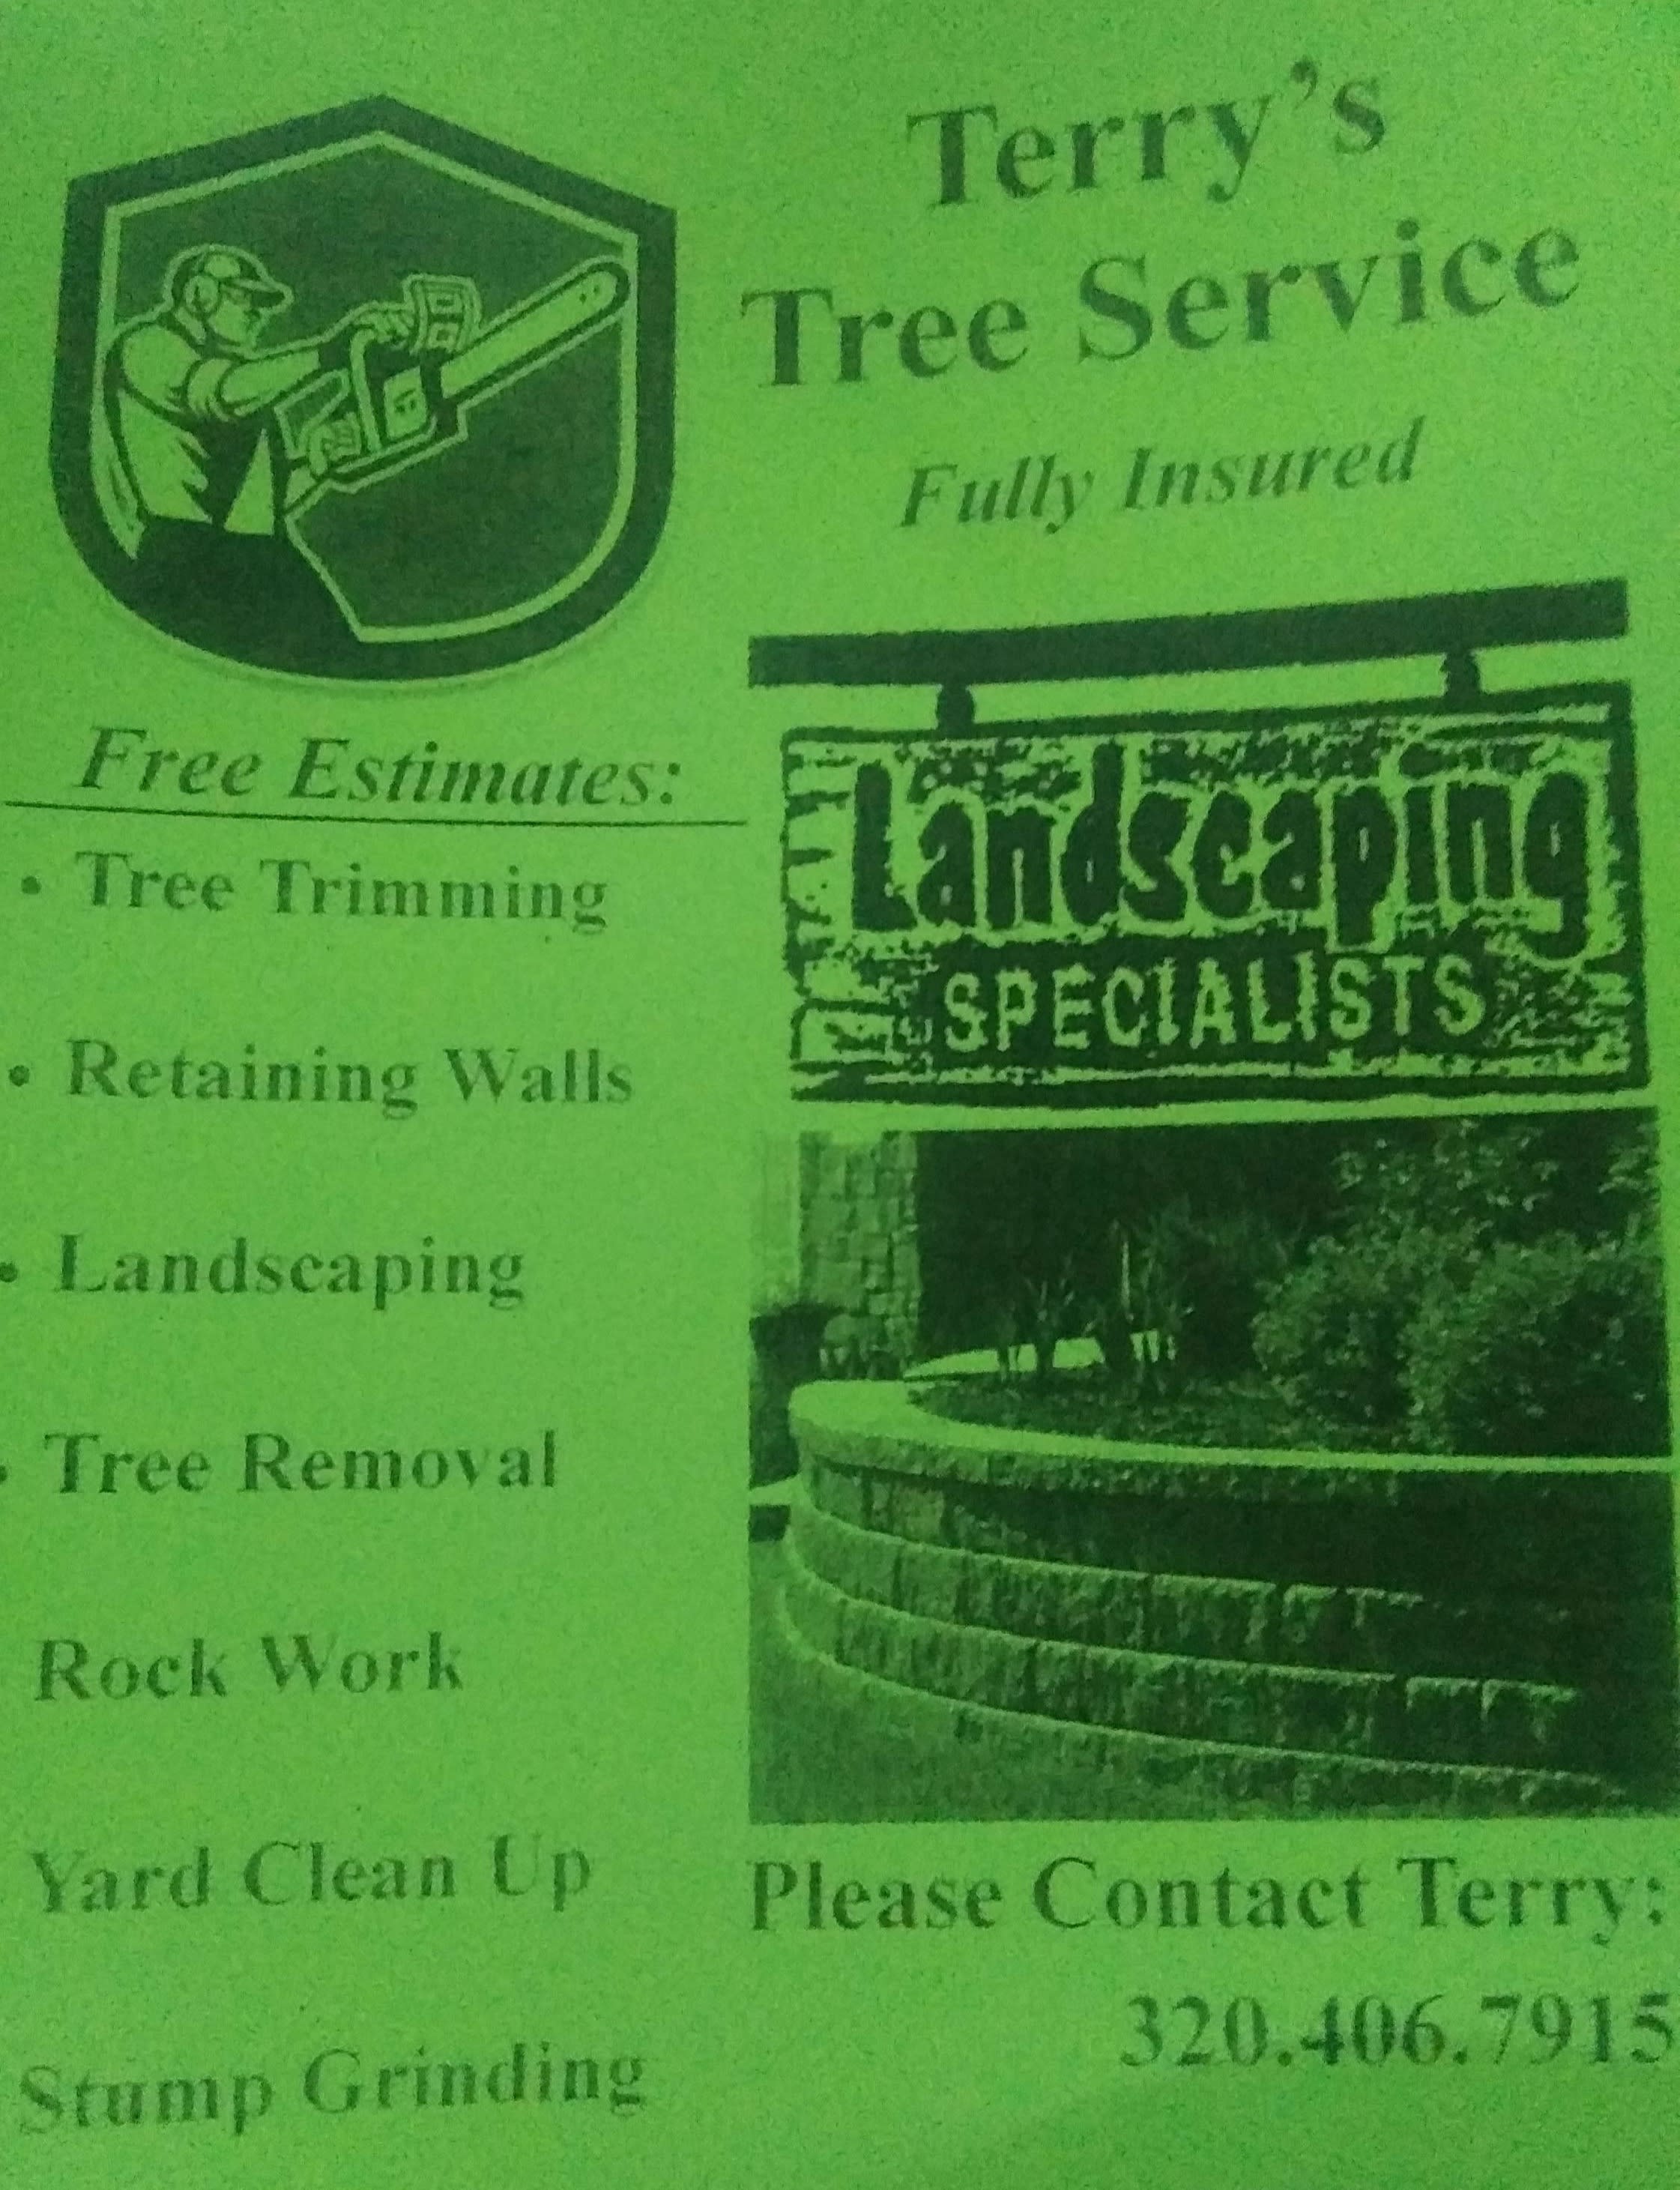 Terry's Tree Service